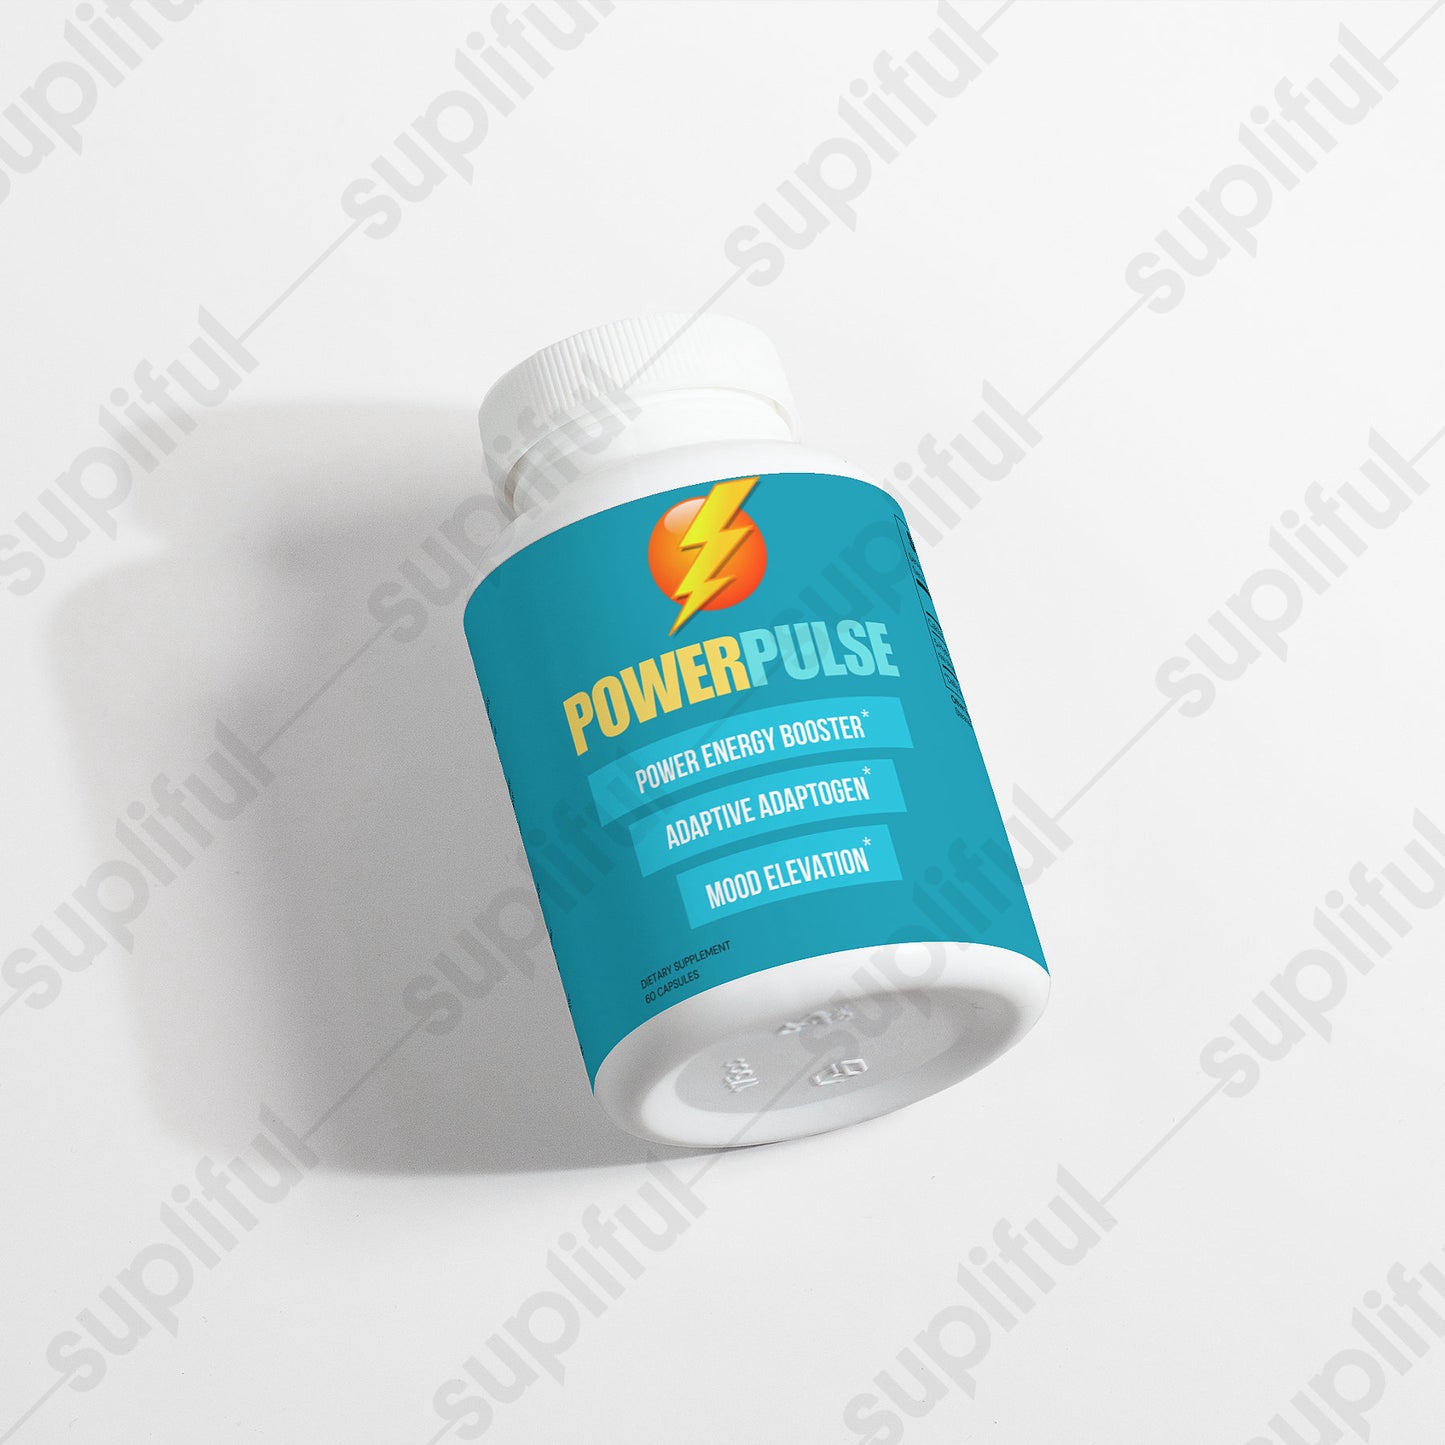 1 Bottle Of PowerPulse